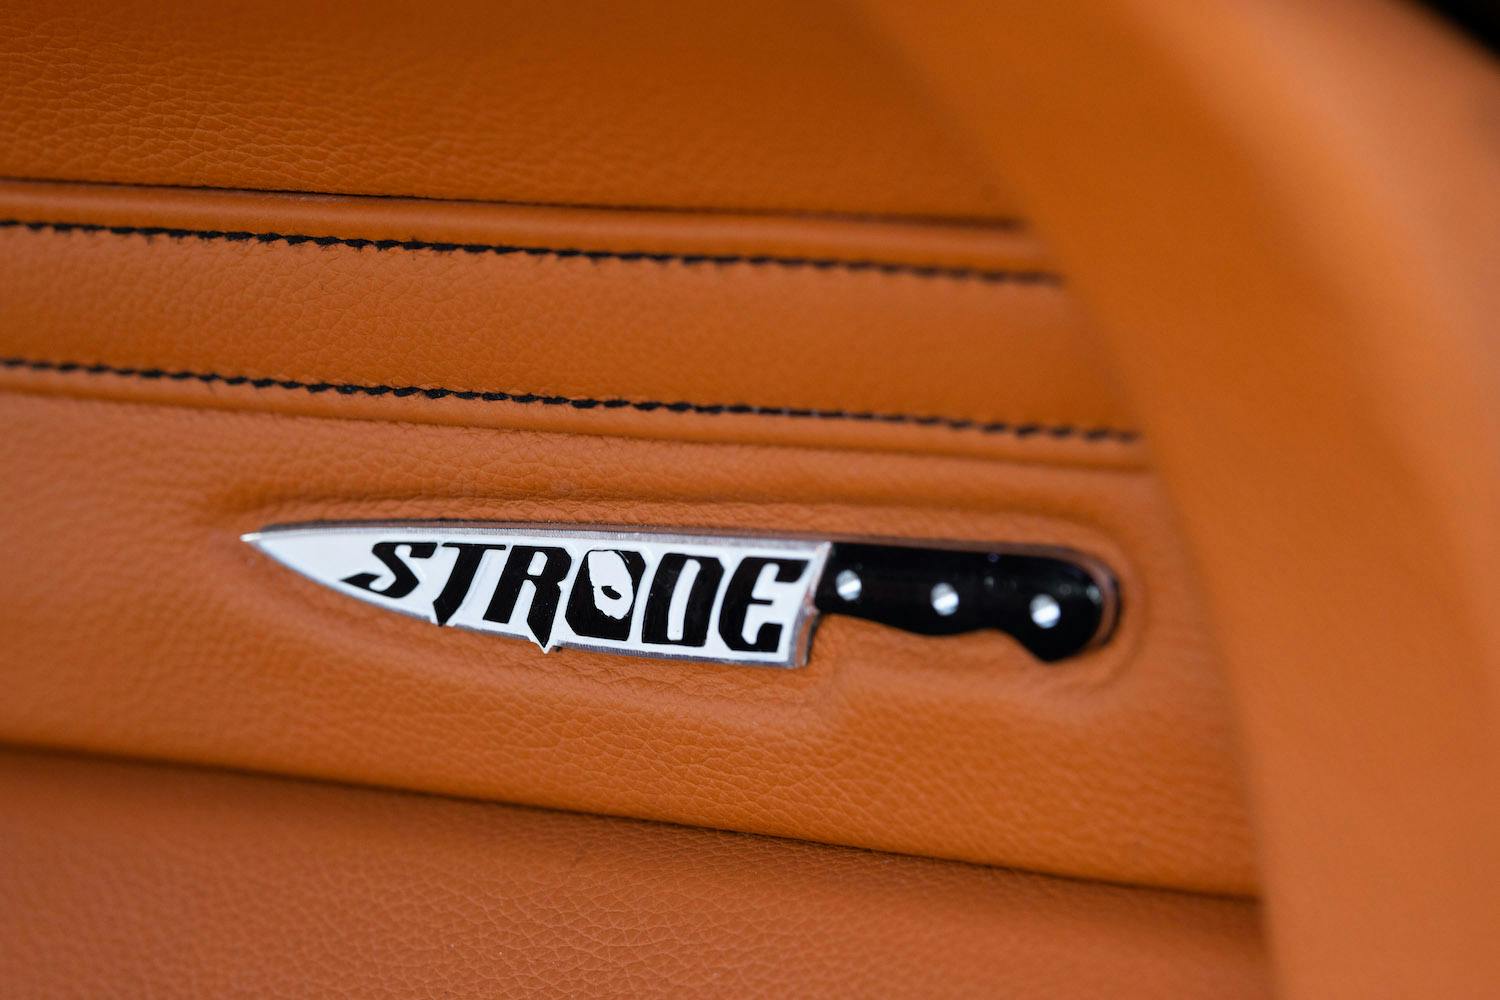 Strode 1969 Chevy Camaro emblem knife